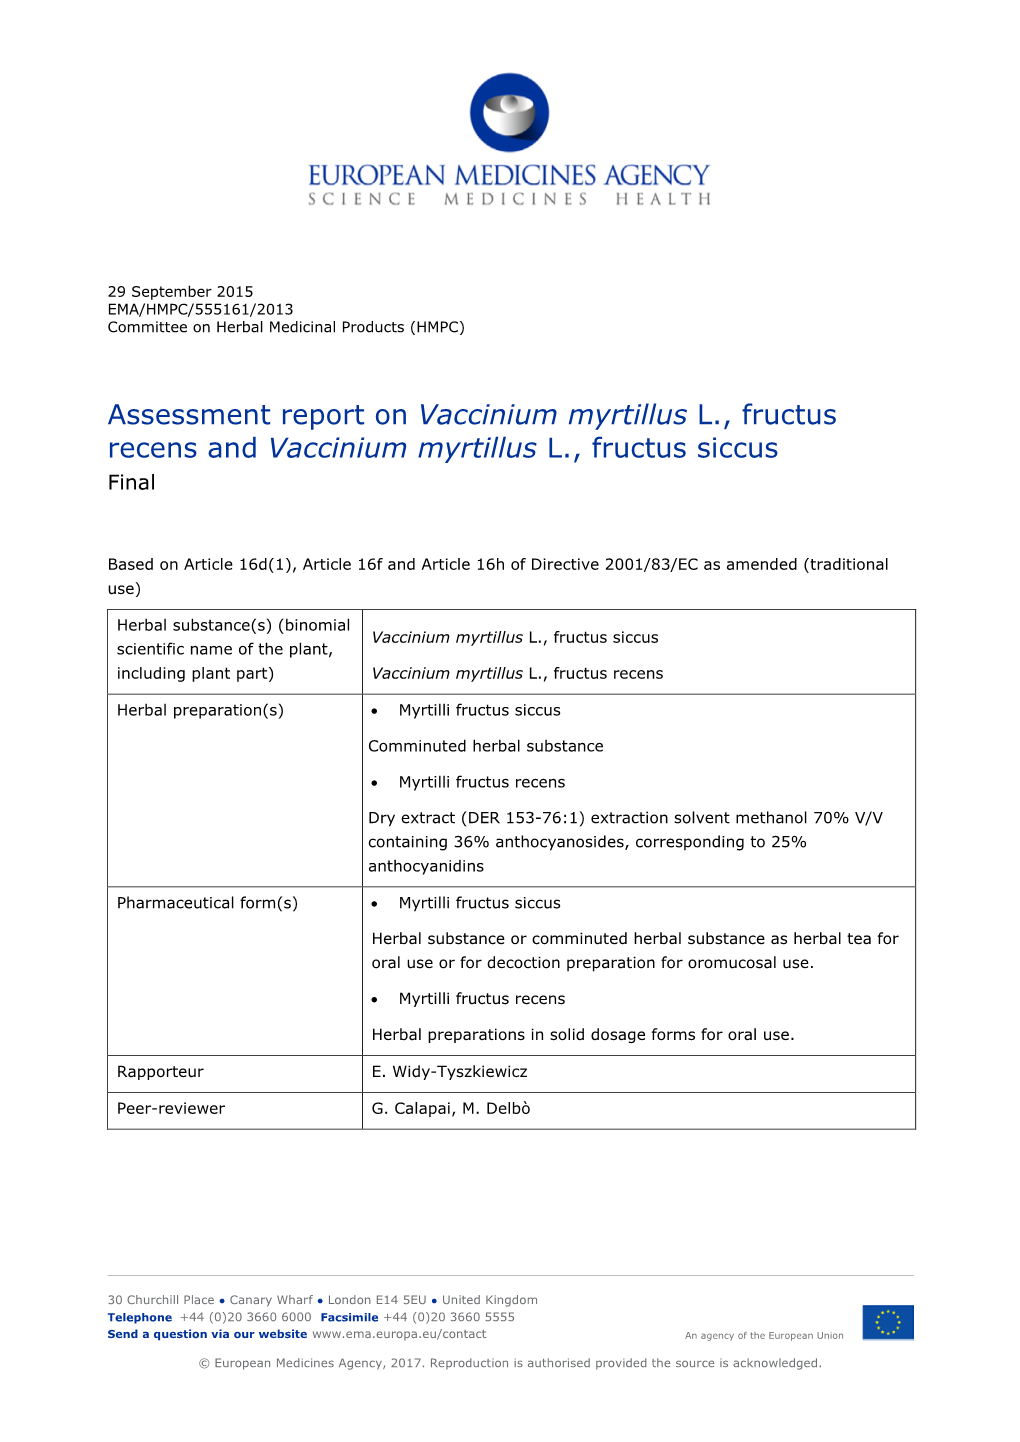 Assessment Report on Vaccinium Myrtillus L., Fructus Recens and Vaccinium Myrtillus L., Fructus Siccus Final